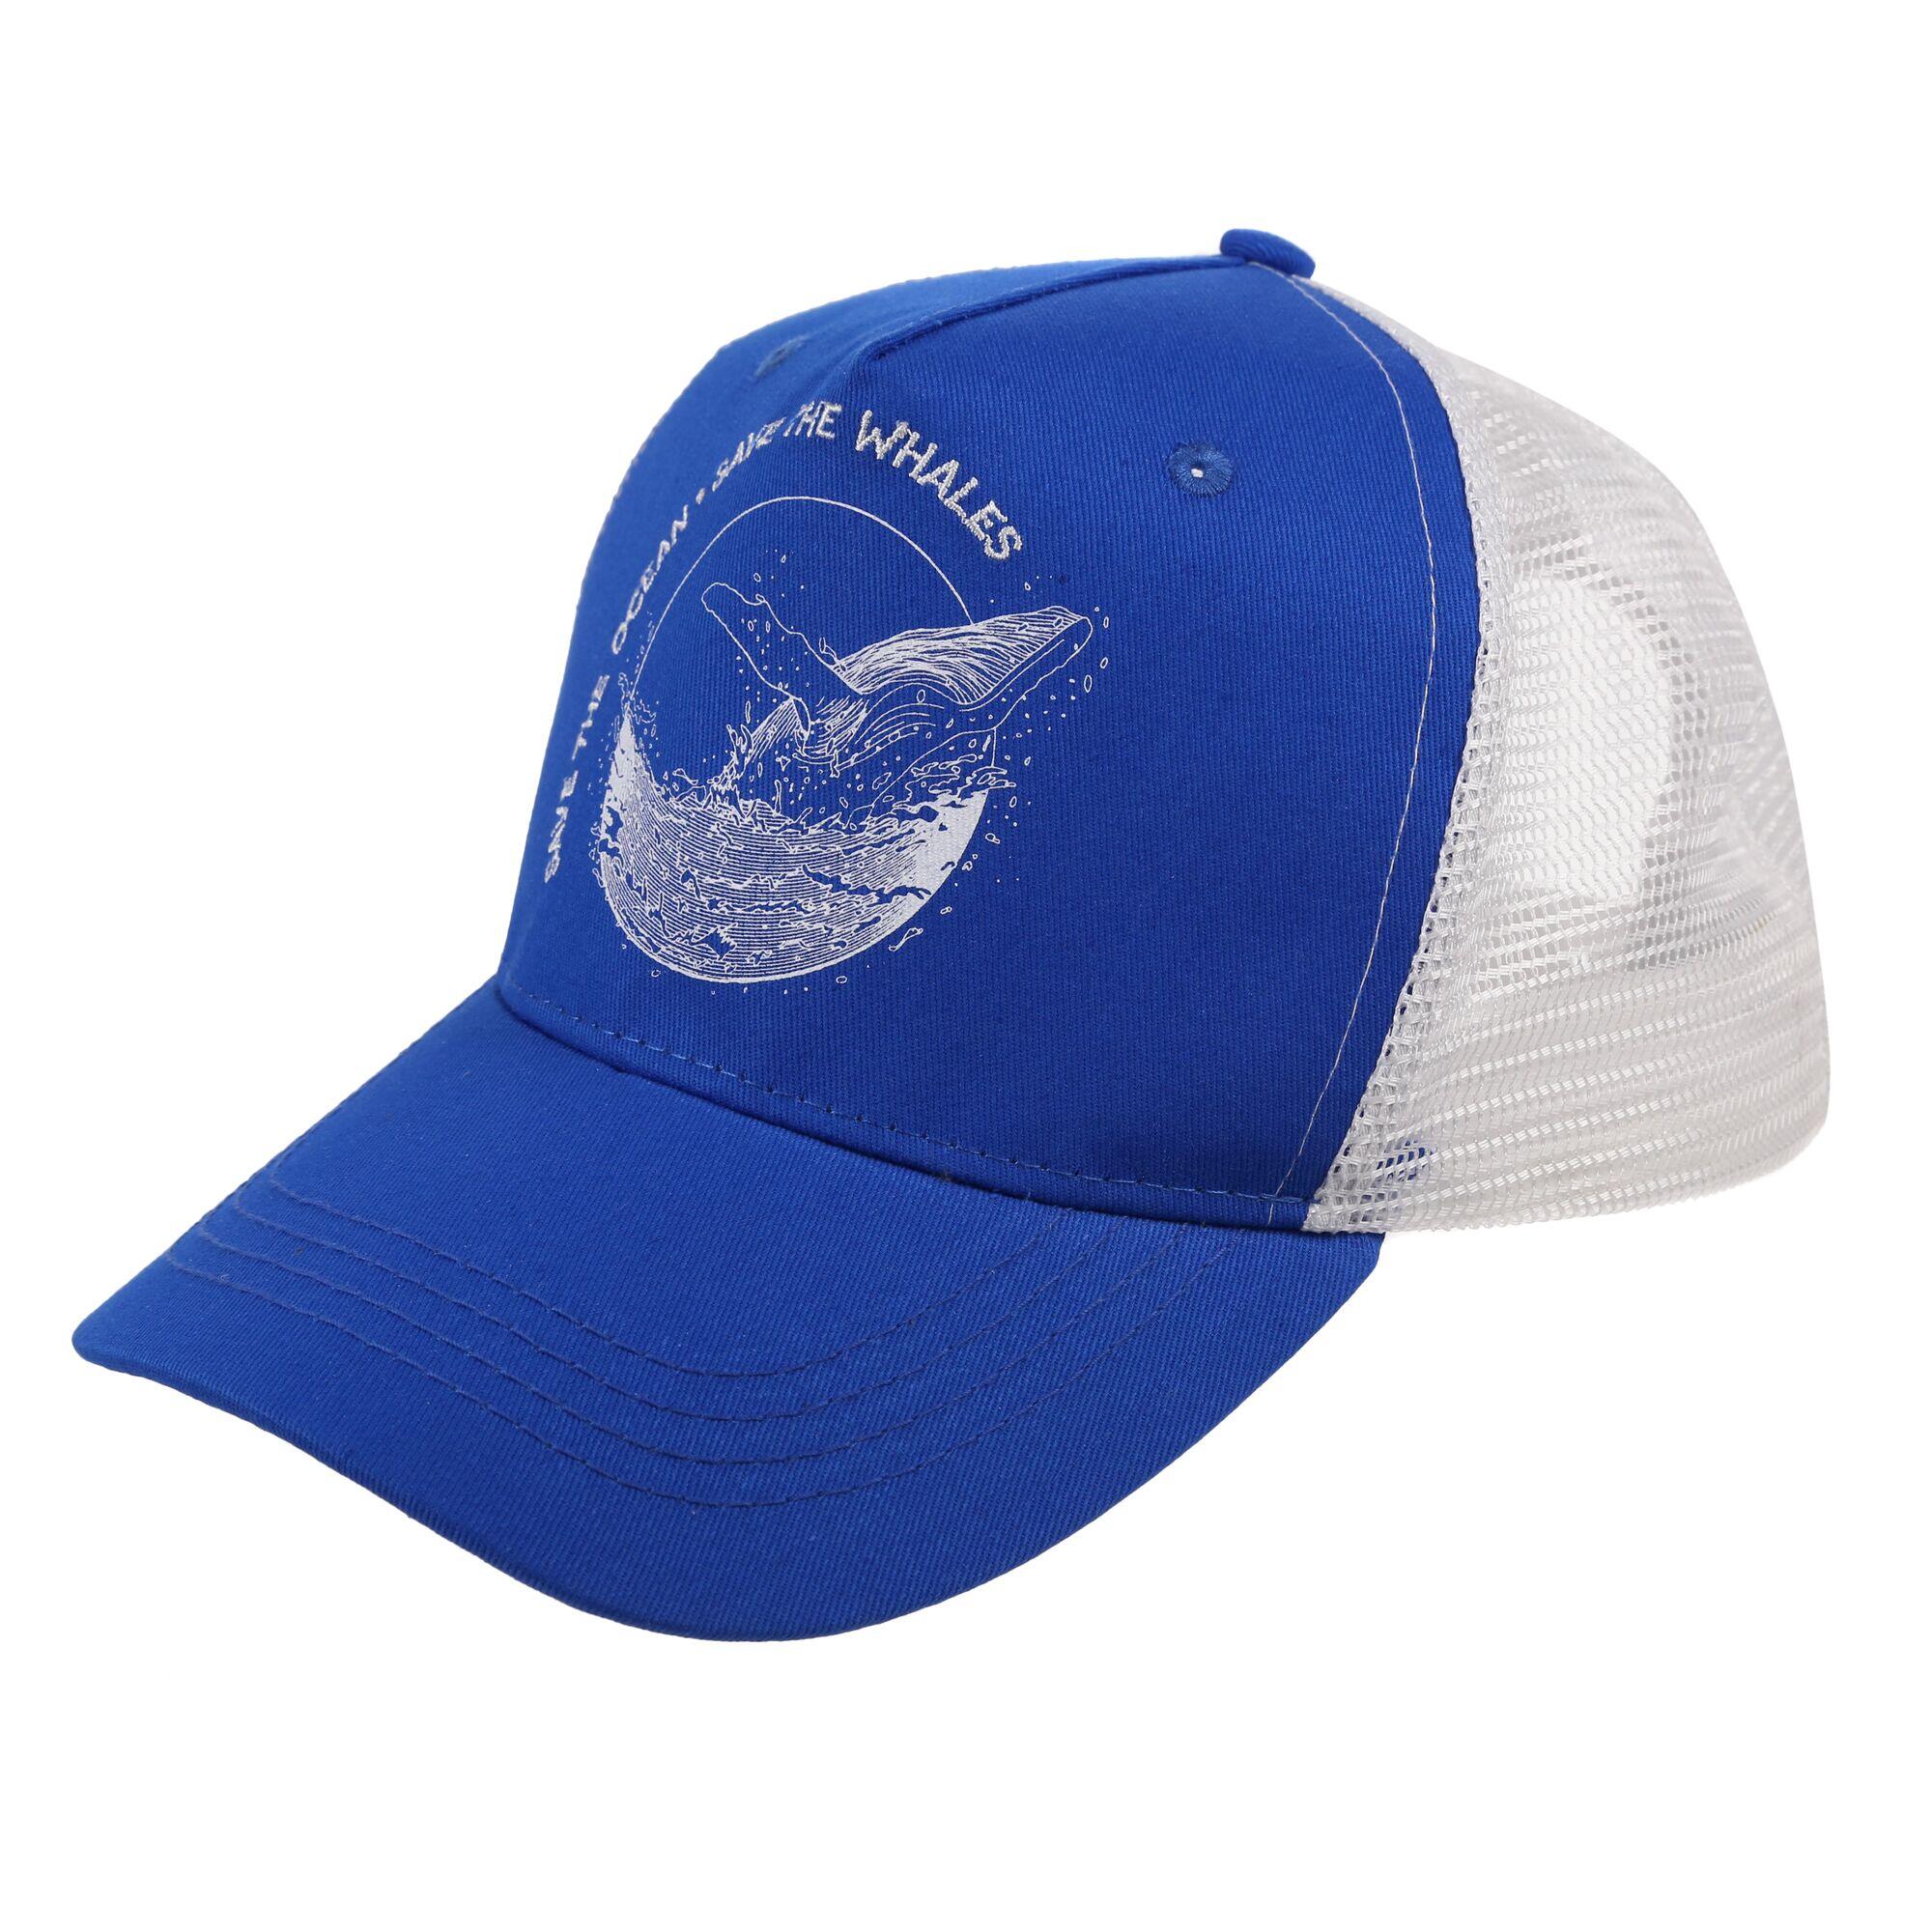 REGATTA Mens Tassian Whale Trucker Cap (Lapis Blue/White)